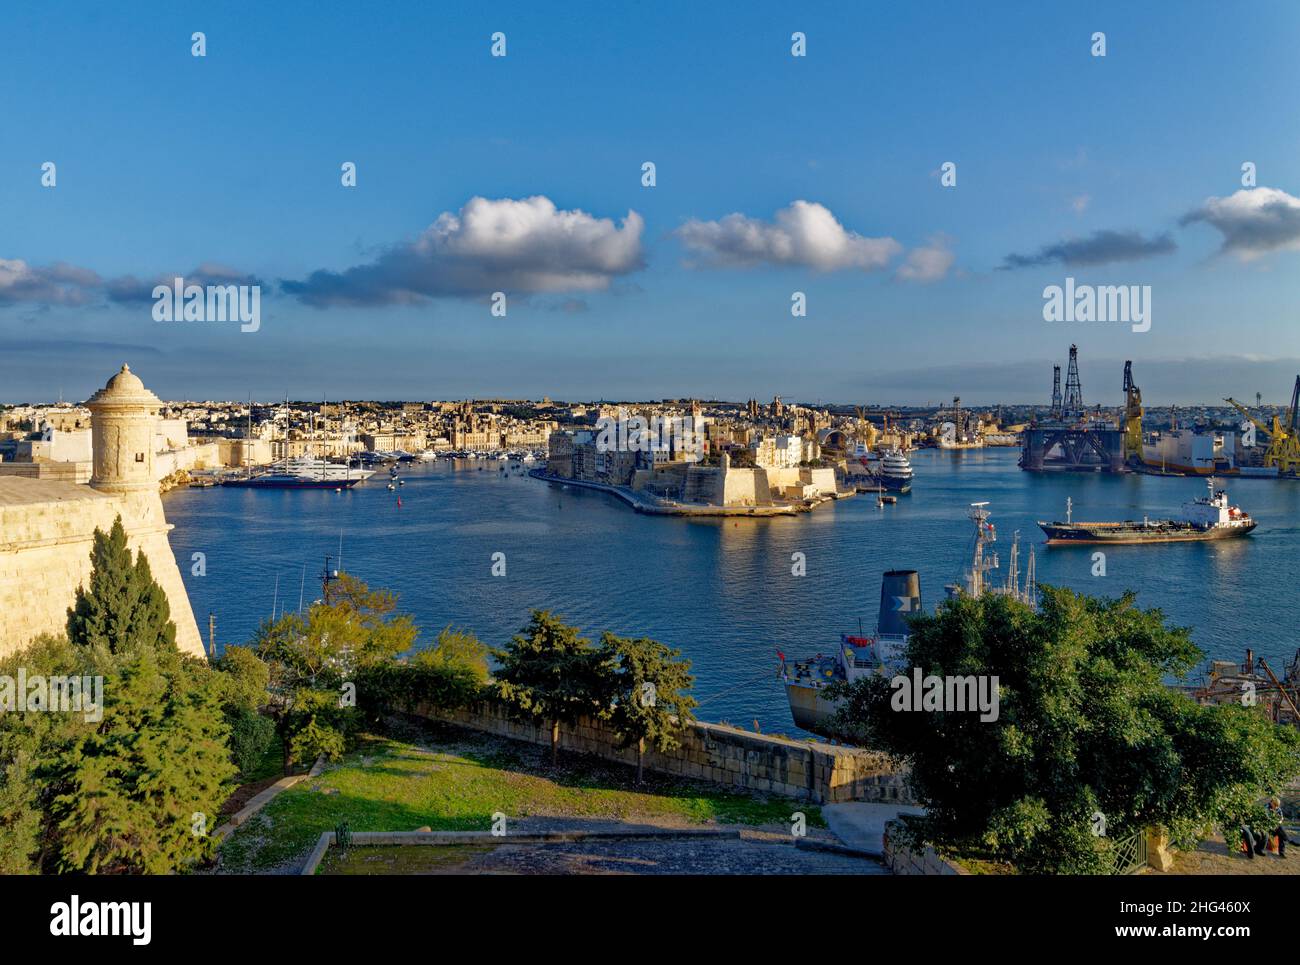 Fort bastion, Grand Harbour, Valletta, Malta - 02.02.2016 Stock Photo